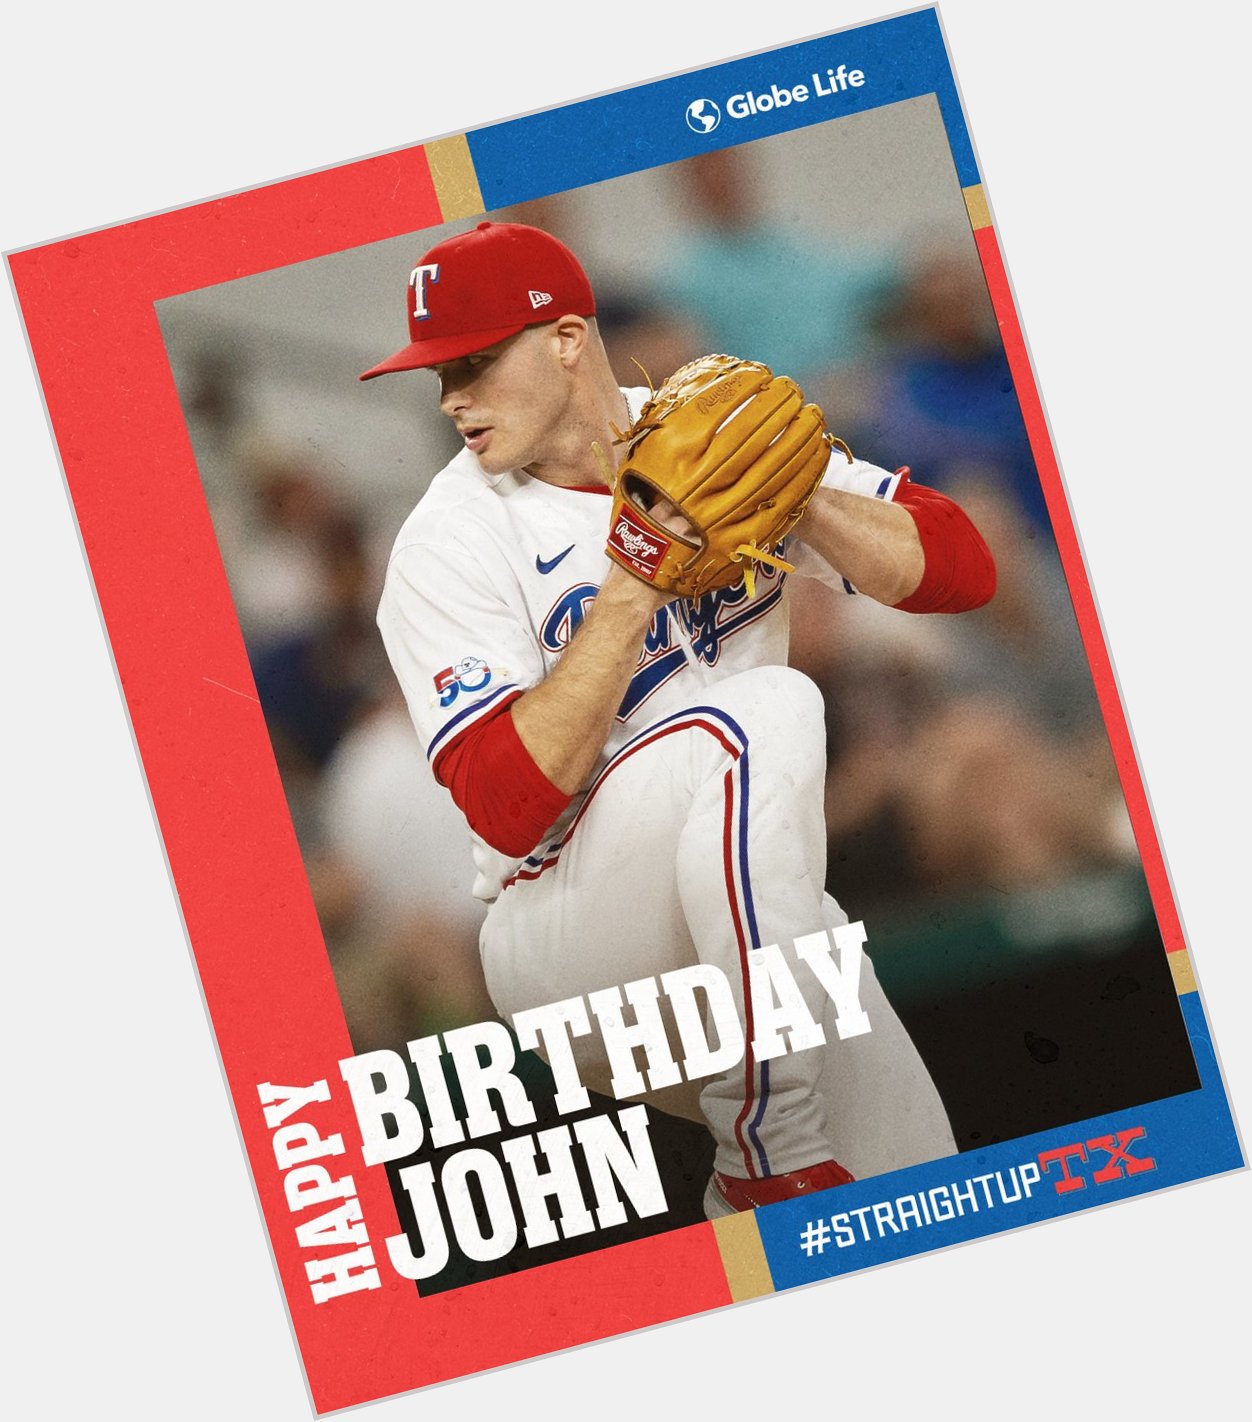 Rangers: Happy 28th birthday to reliever John King! 